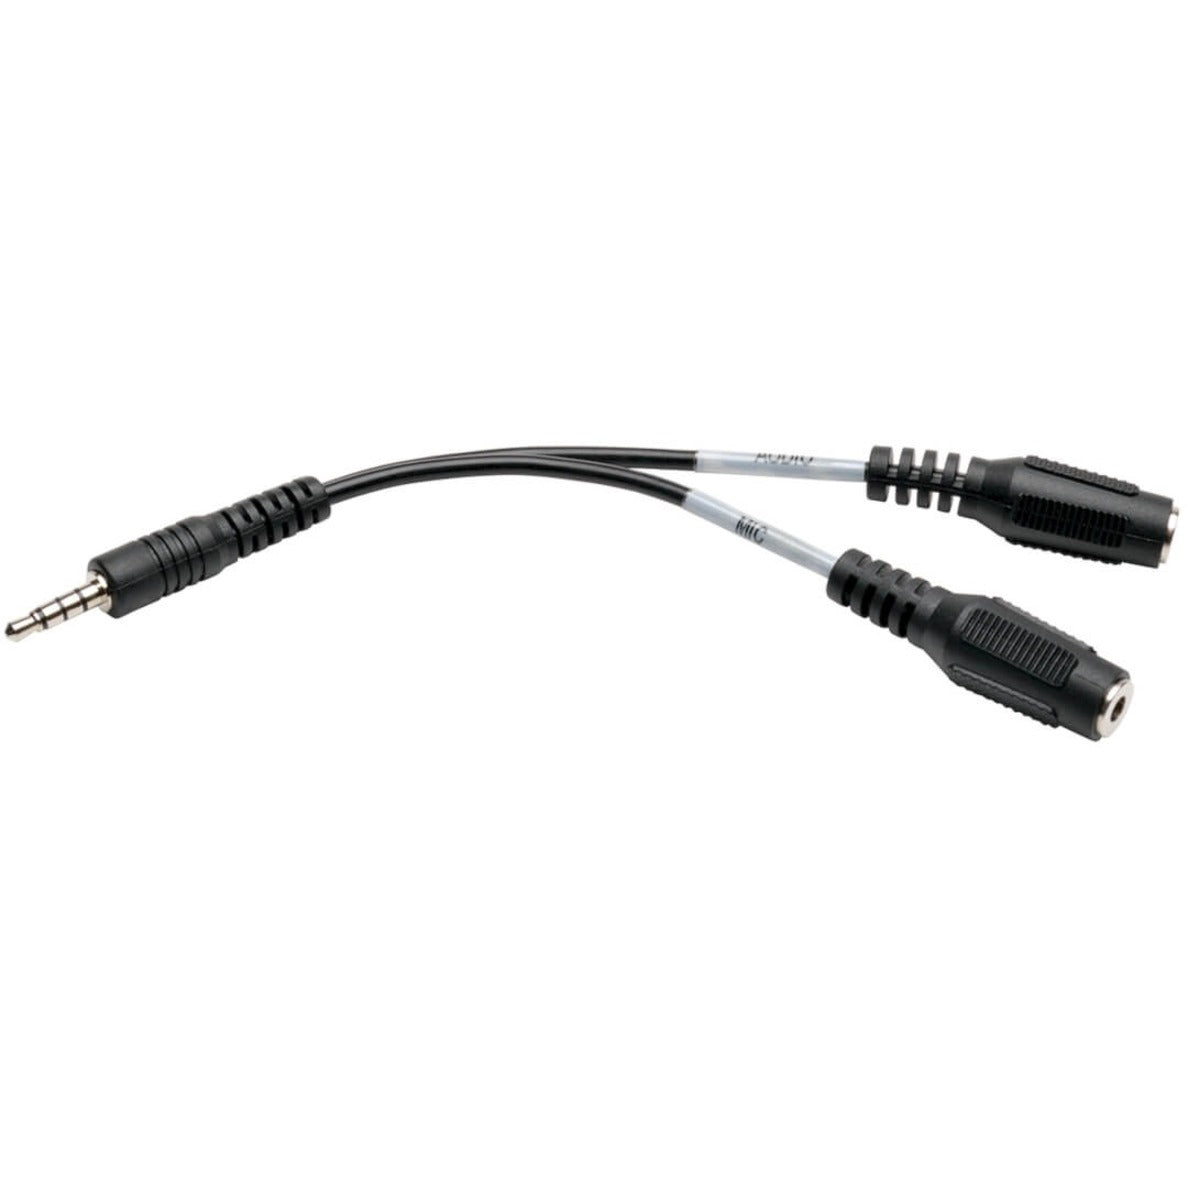 Tripp Lite P318-06N-MFF Mini-phone Audio Cable, 6" Splitter Cable